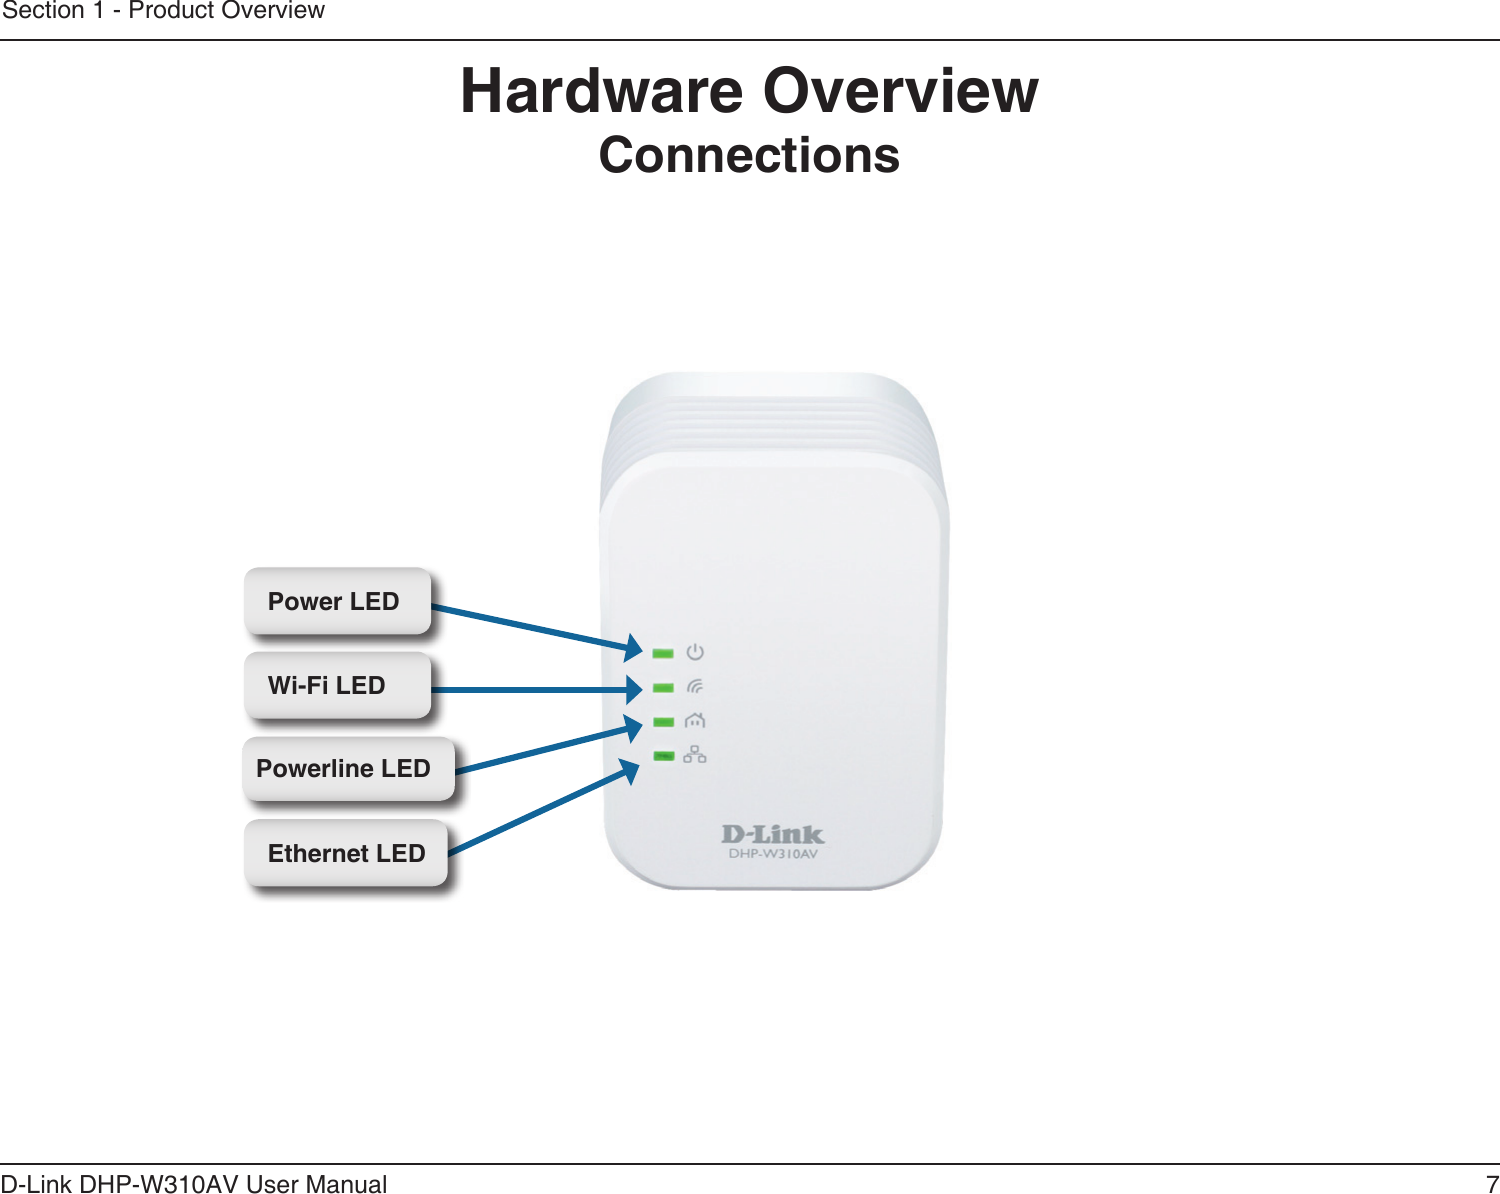 7D-Link DHP-W310AV User ManualSection 1 - Product OverviewHardware OverviewConnectionsPowerline LEDWi-Fi LEDPower LEDEthernet LED